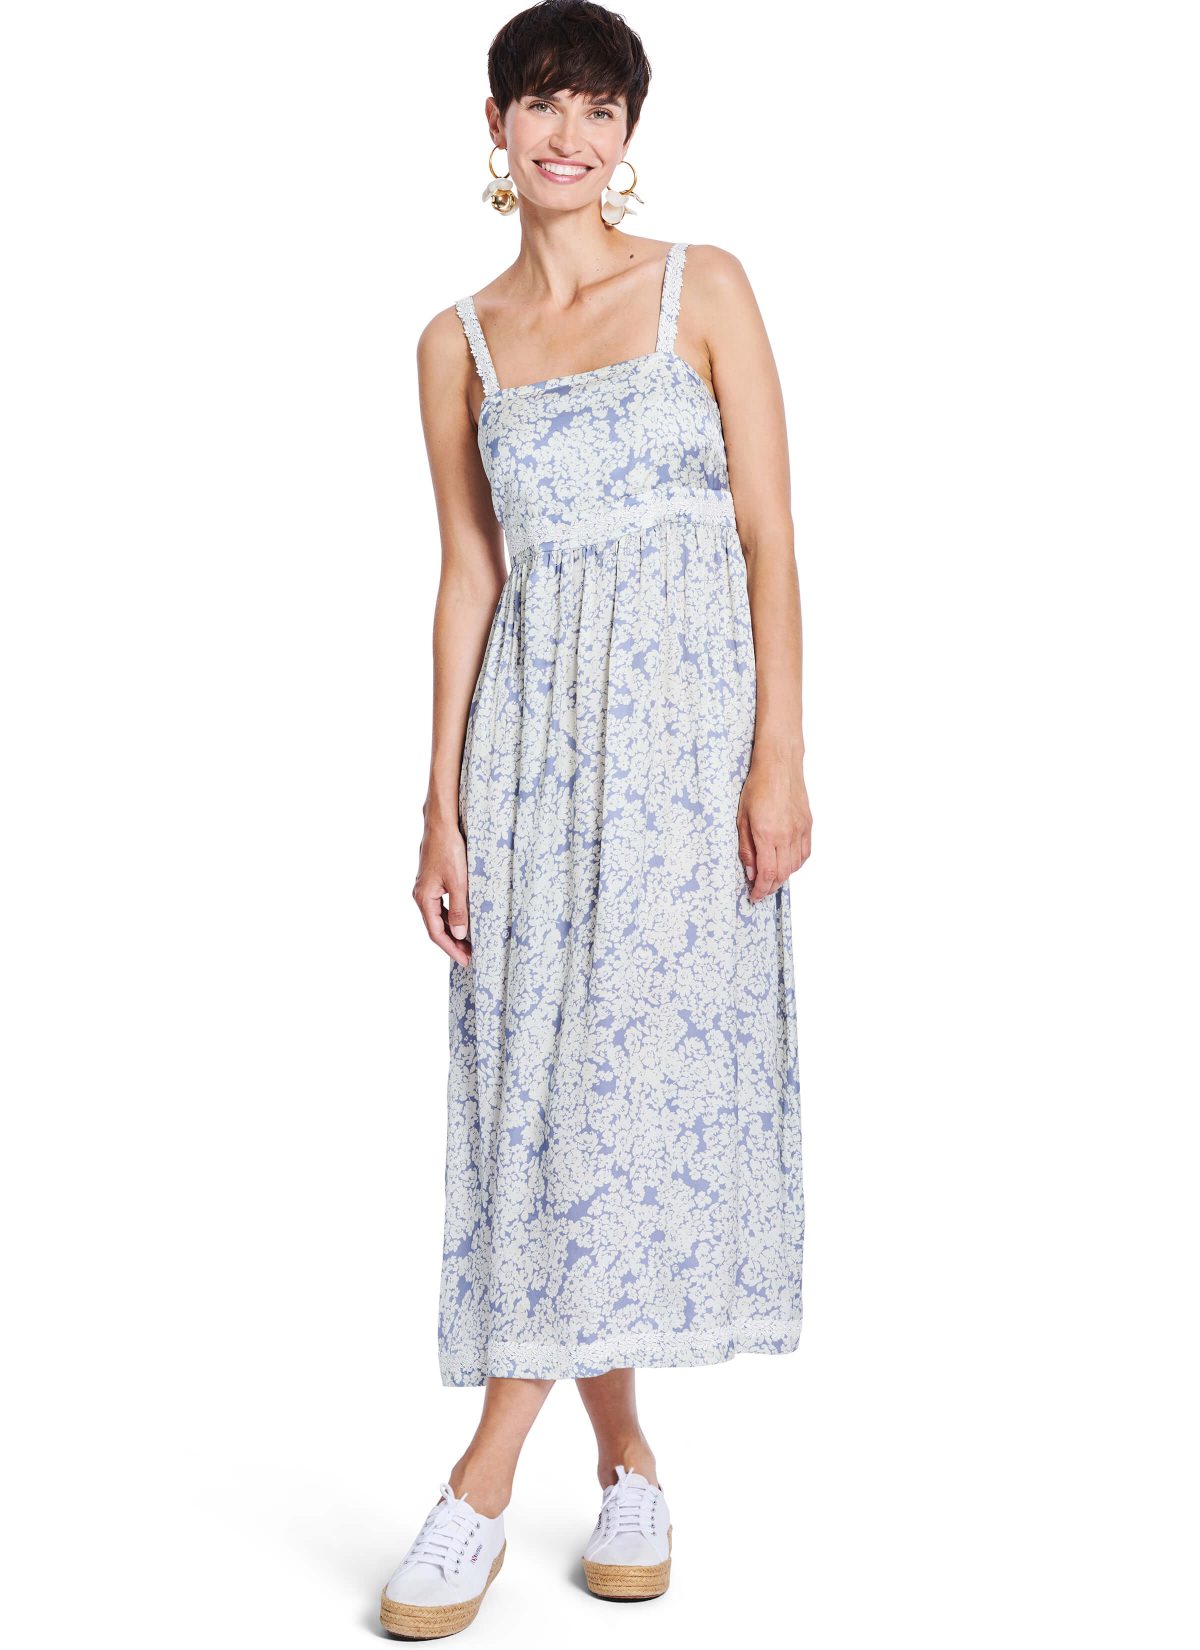 Burda Style Pattern 5821 Misses' Dress